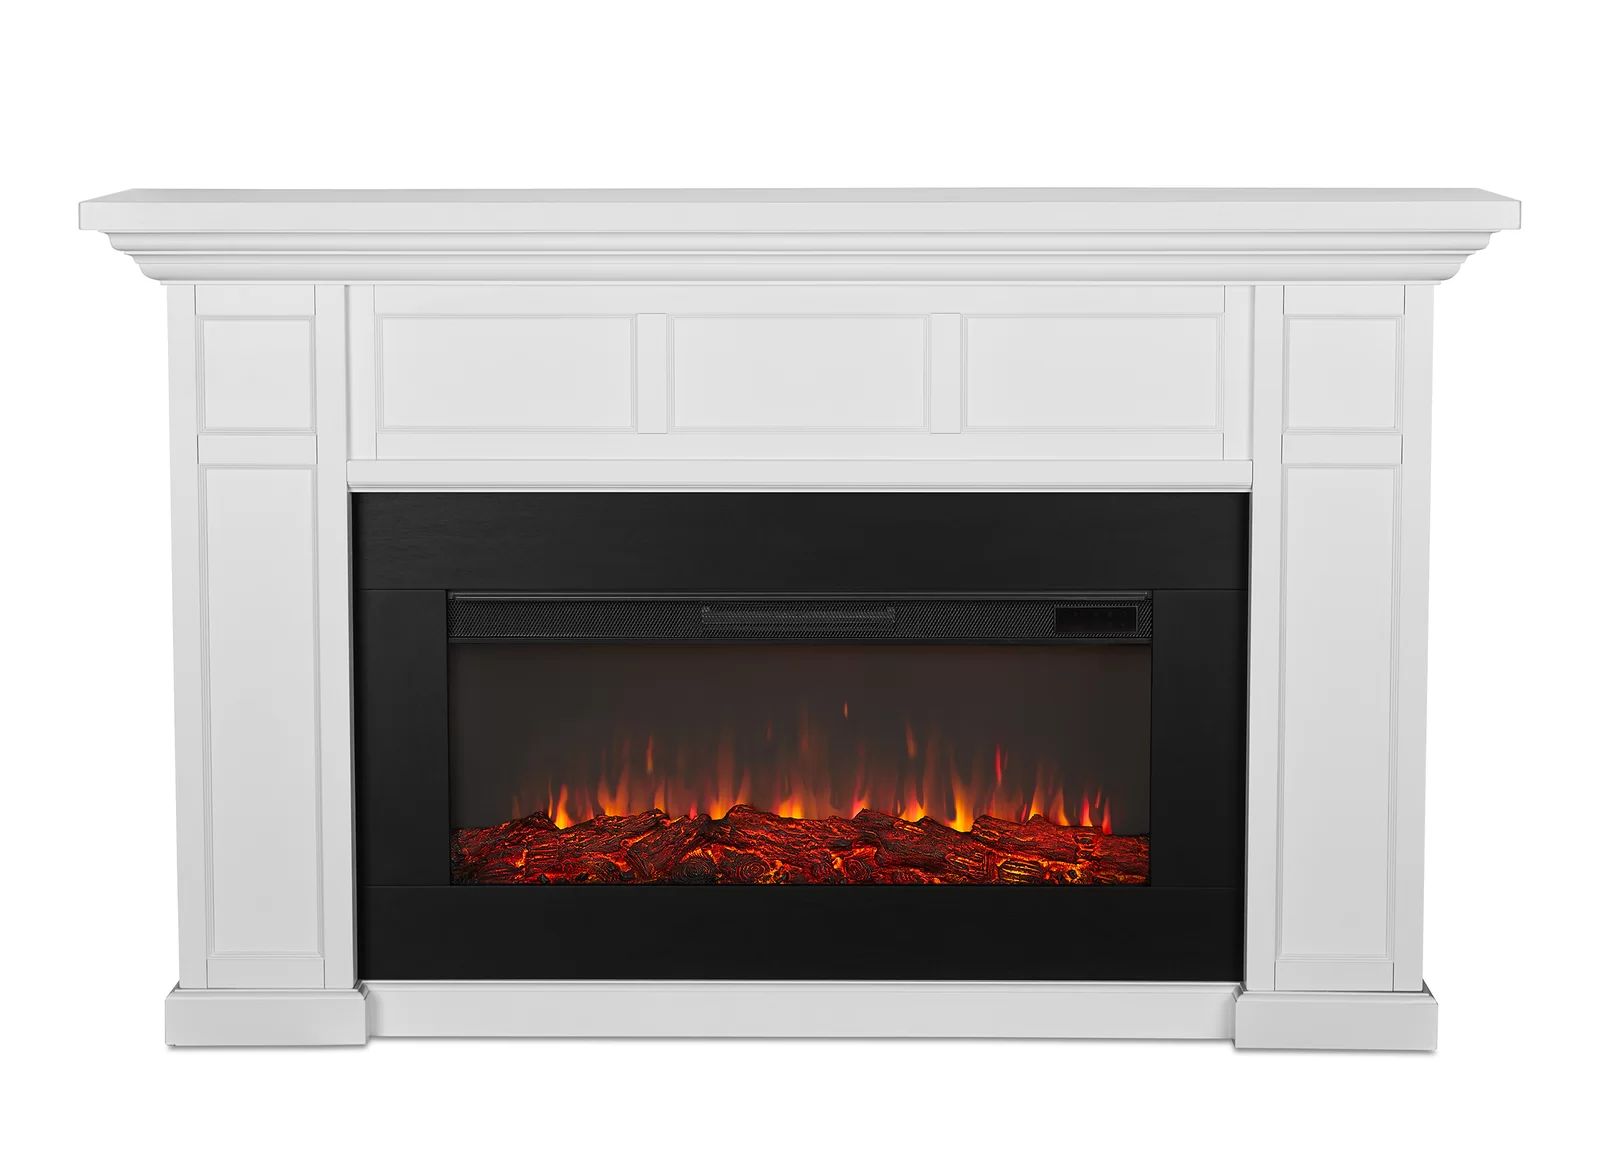 Alcott 74.75'' W Electric Fireplace | Wayfair North America